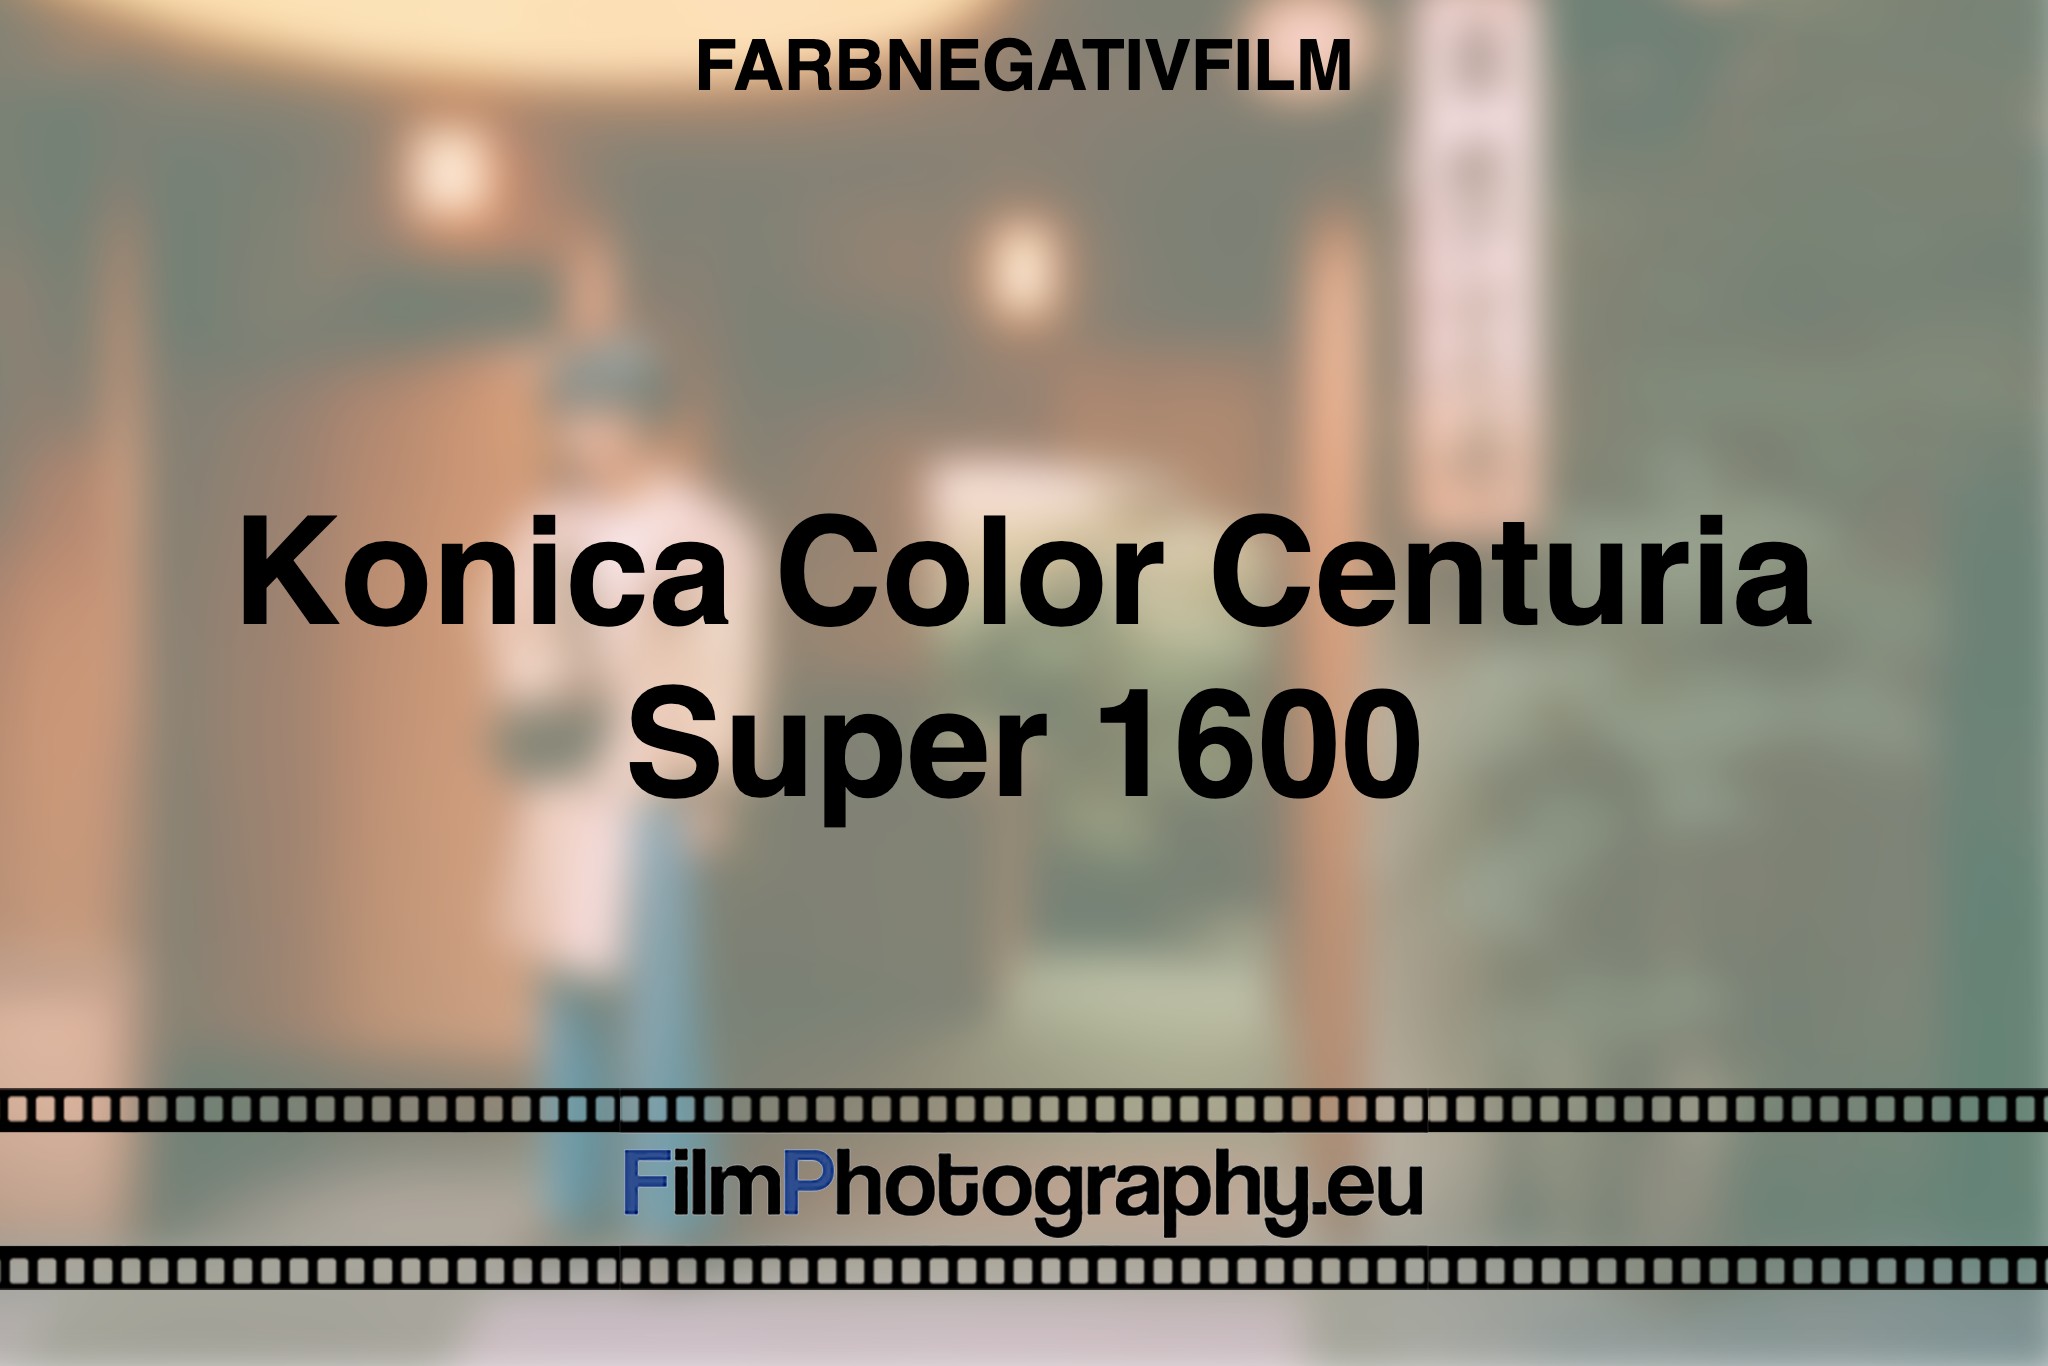 konica-color-centuria-super-1600-farbnegativfilm-bnv